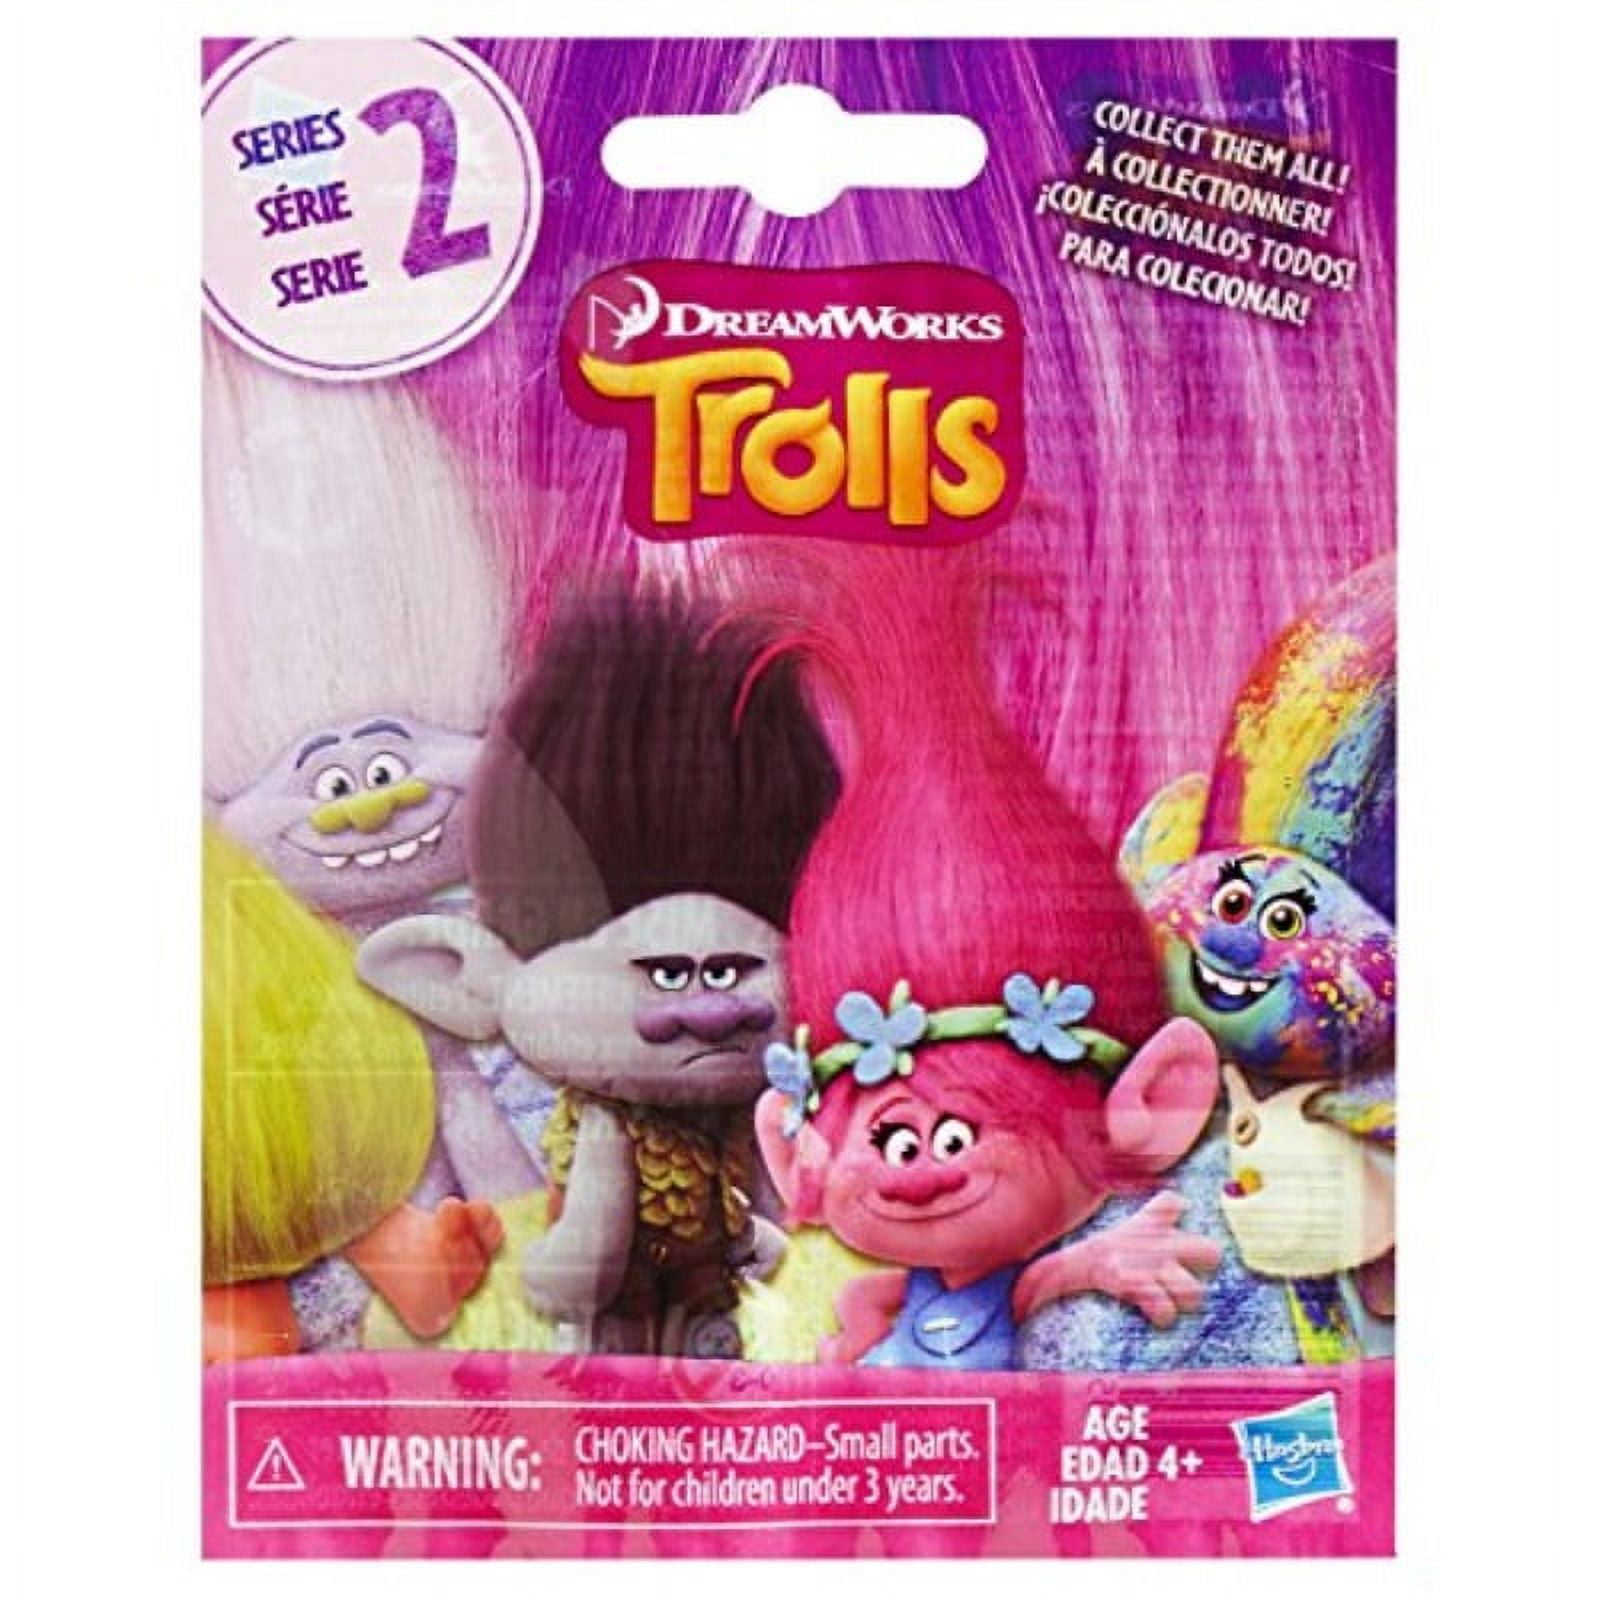 Trolls Party Favors Set - 12 PC Trolls Goodie Bag Filler Bundle with 6 Trolls Blind Bags with Trolls Mini Figurine Mystery Toys Plus 4 Trolls